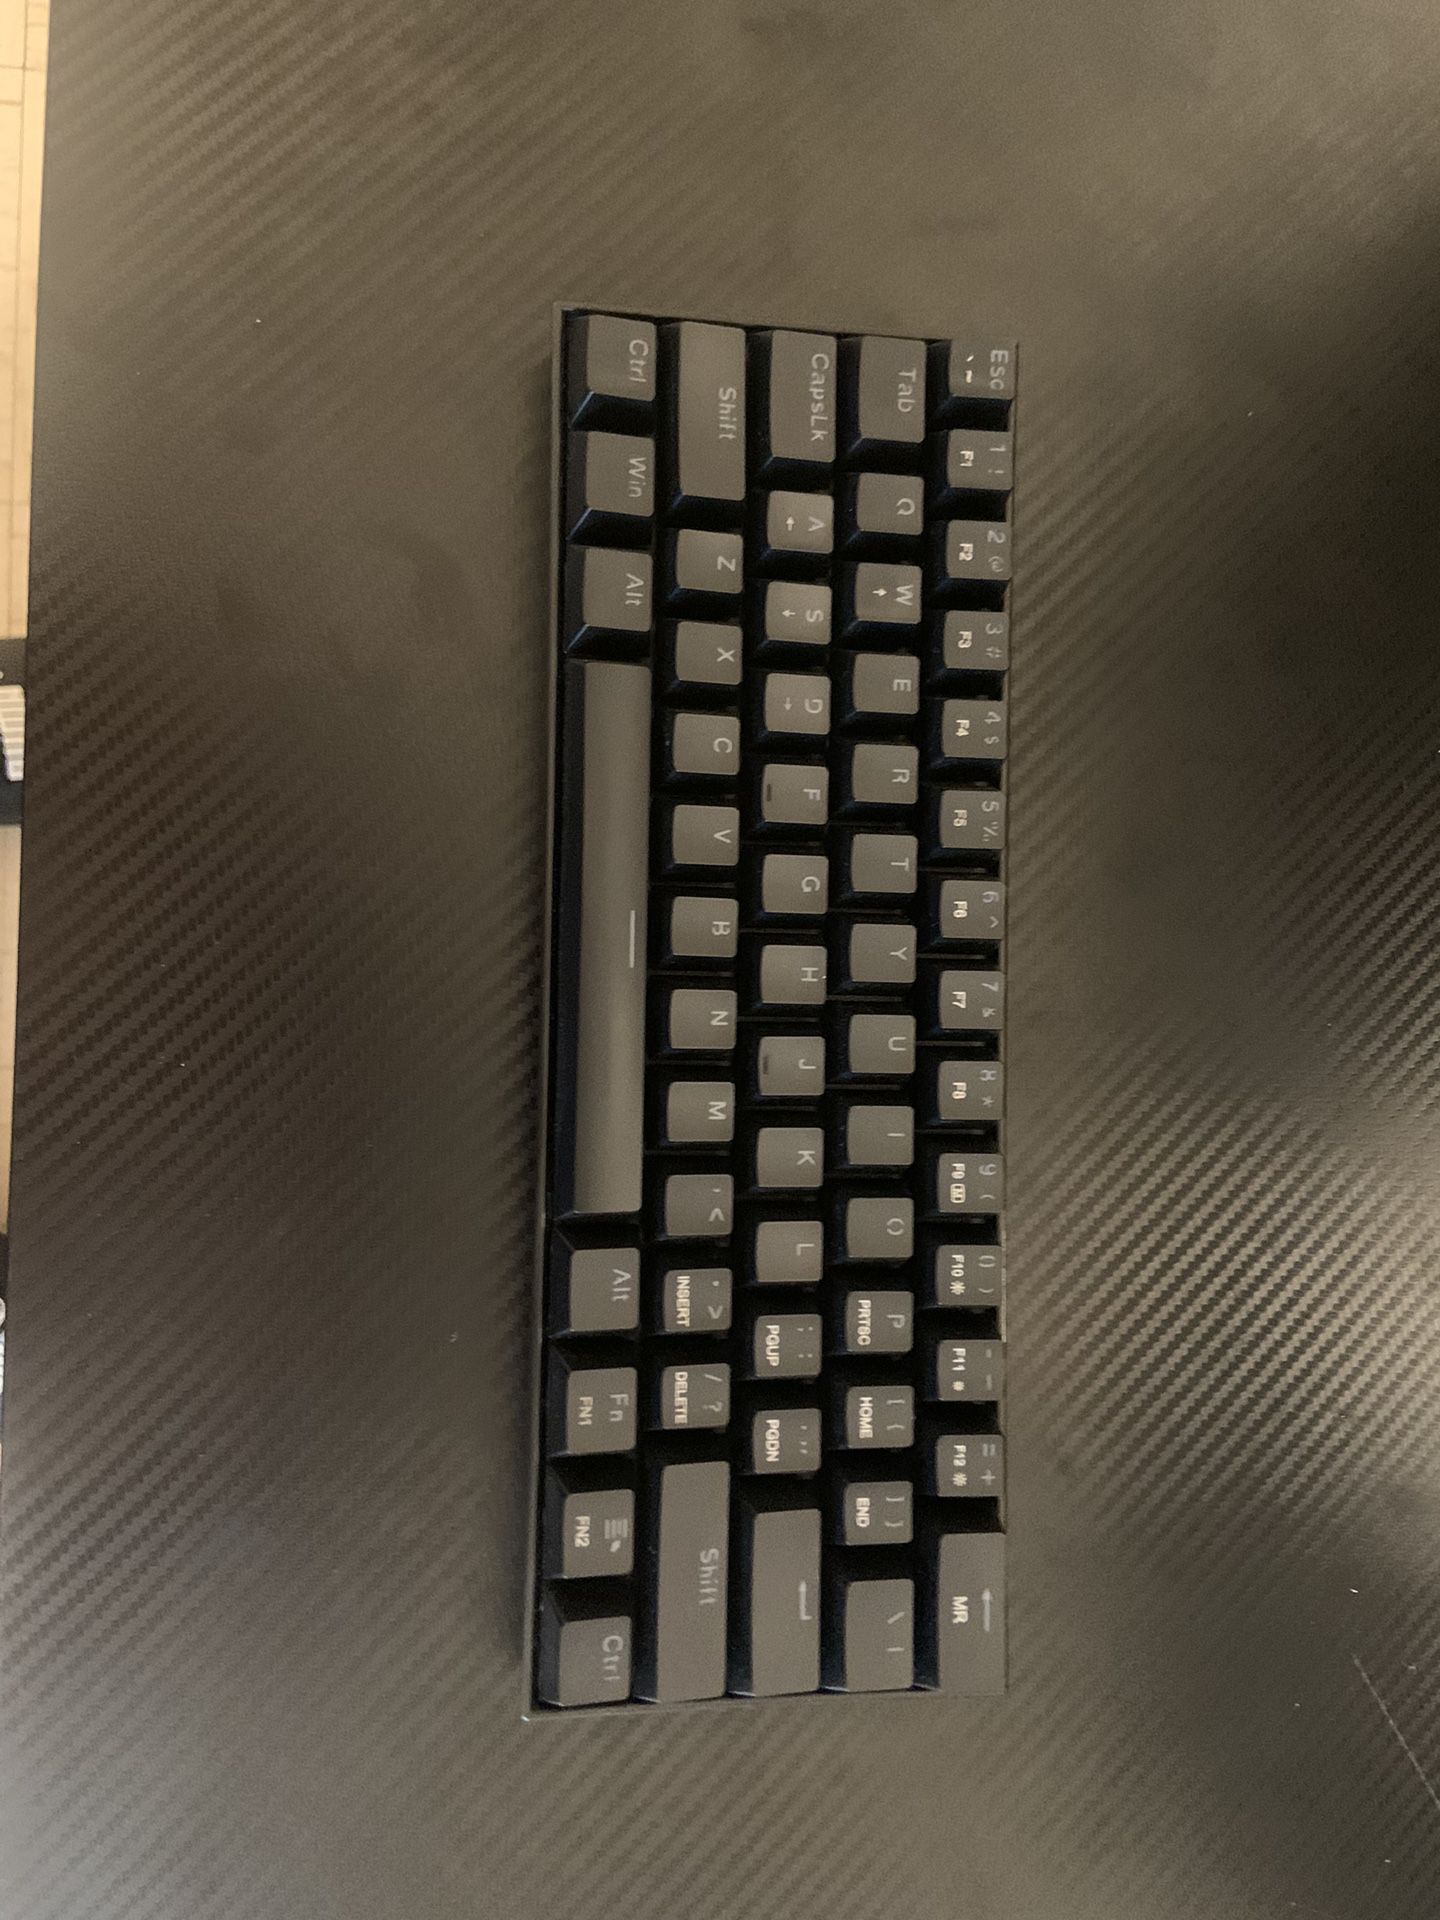 Red Dragon 60% Keyboard